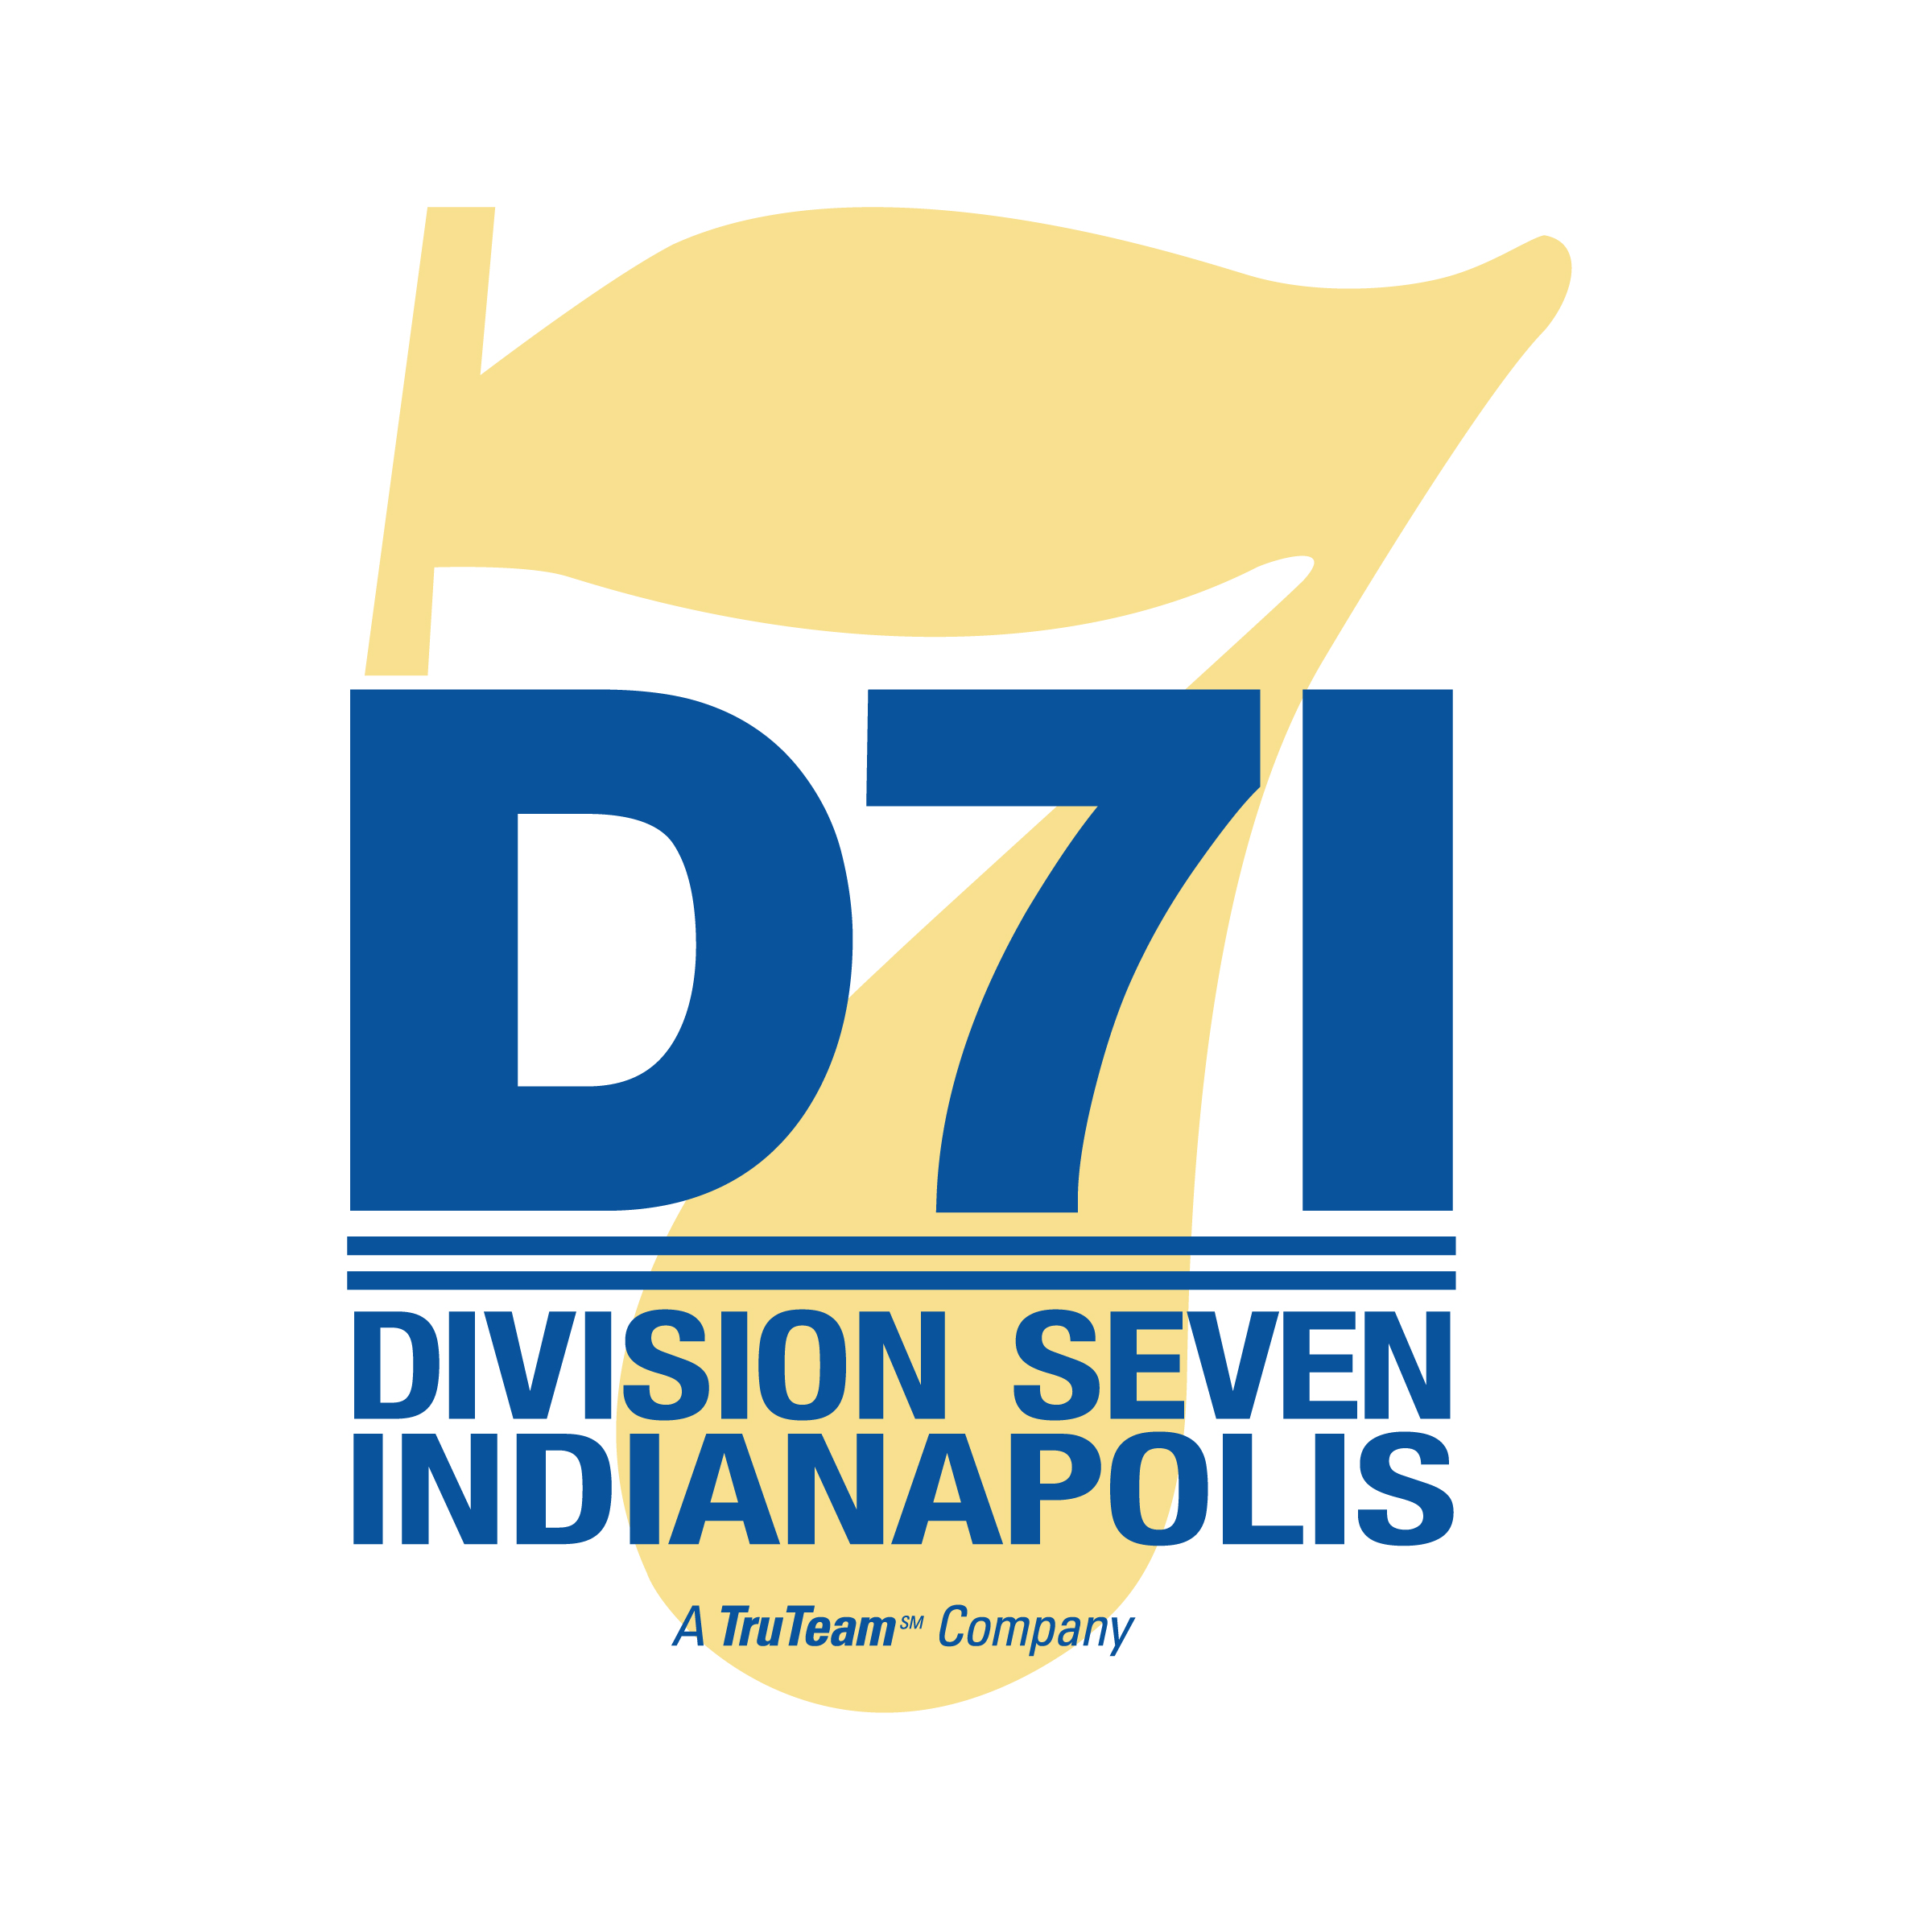 Division Seven Indianapolis Logo - A TruTeam Compnay